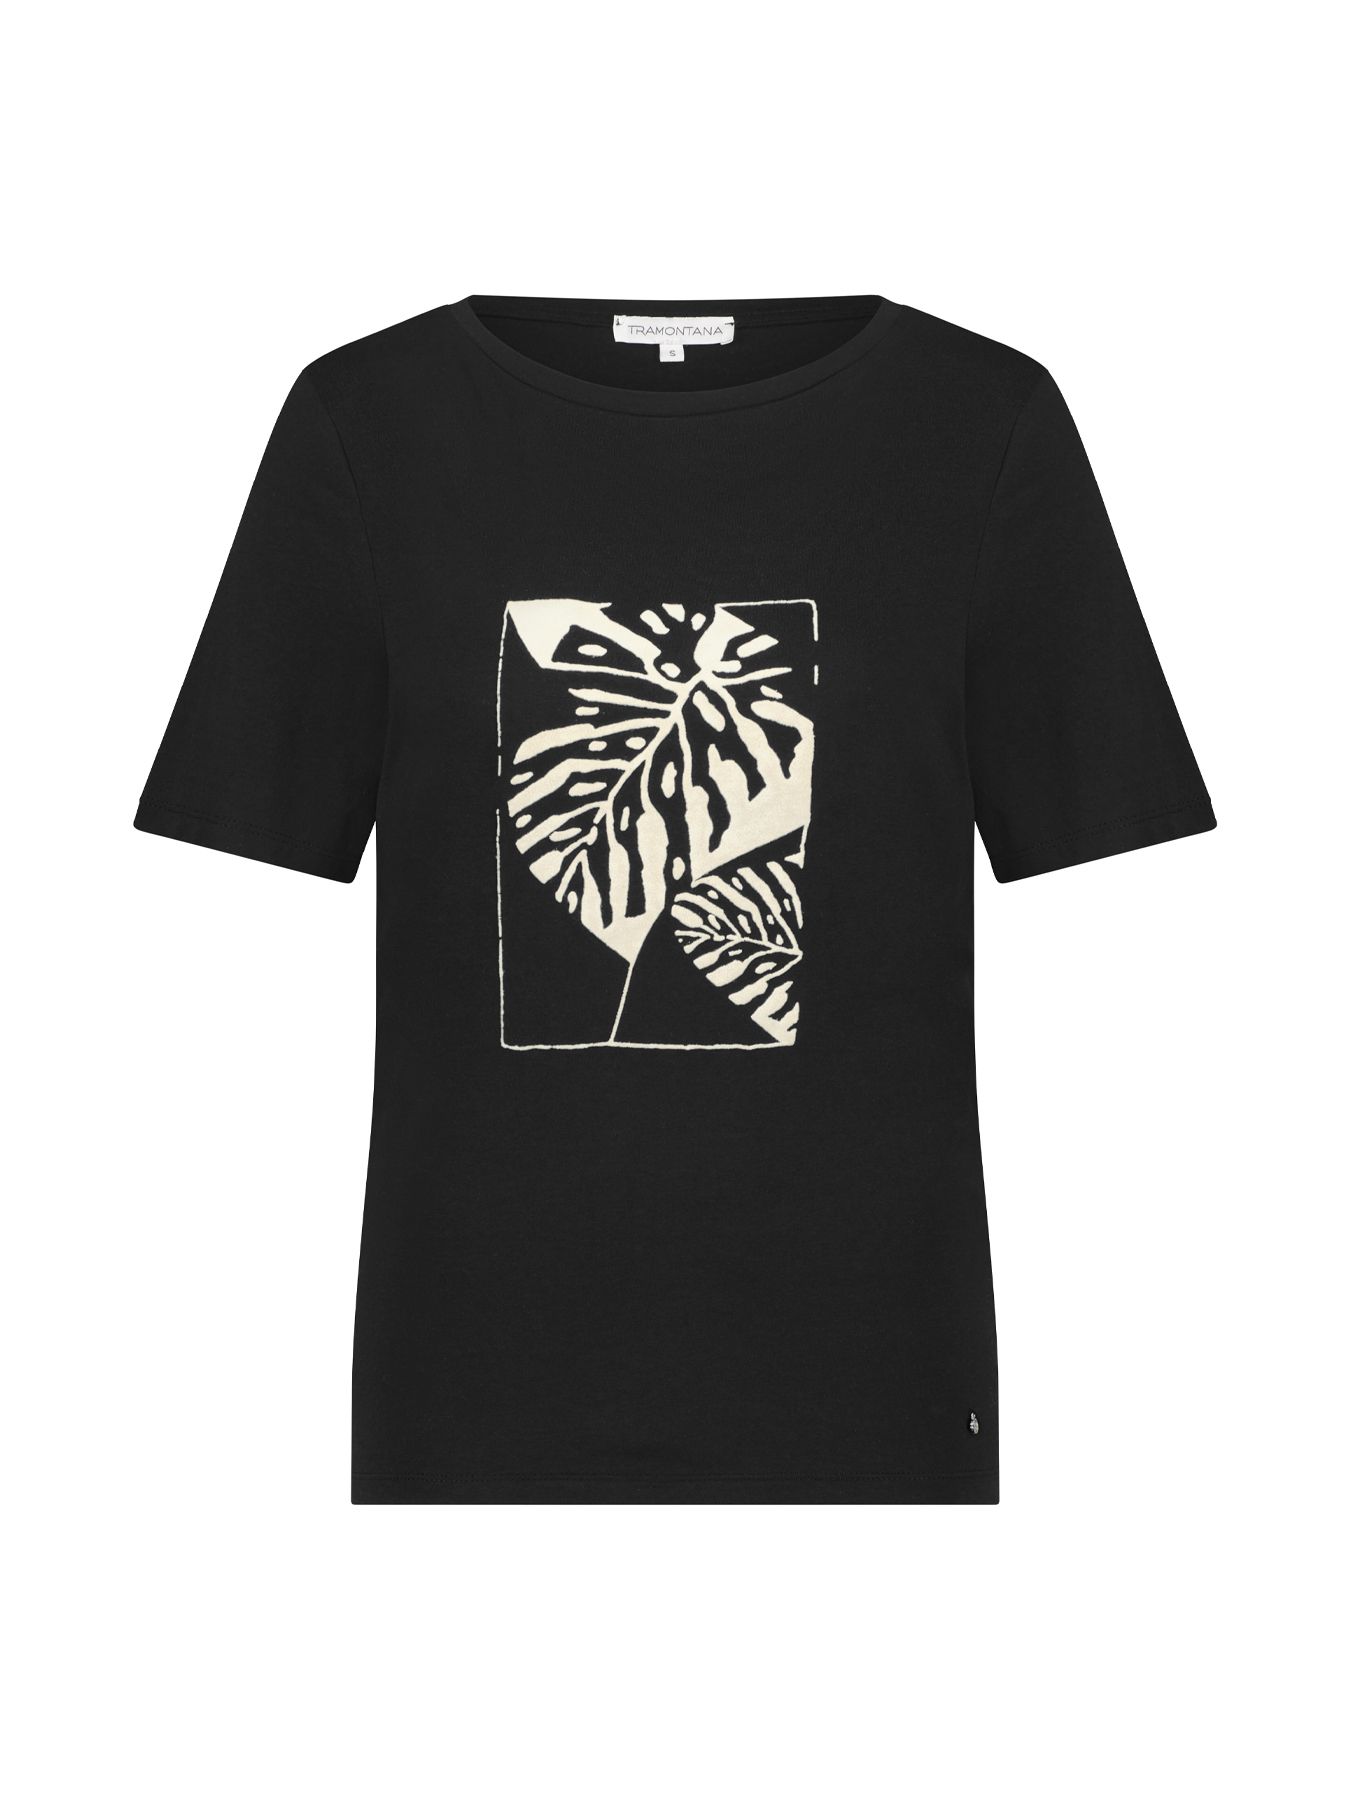 Tramontana T-Shirt Leaf Black 009000 00104375-EKA26012900000001